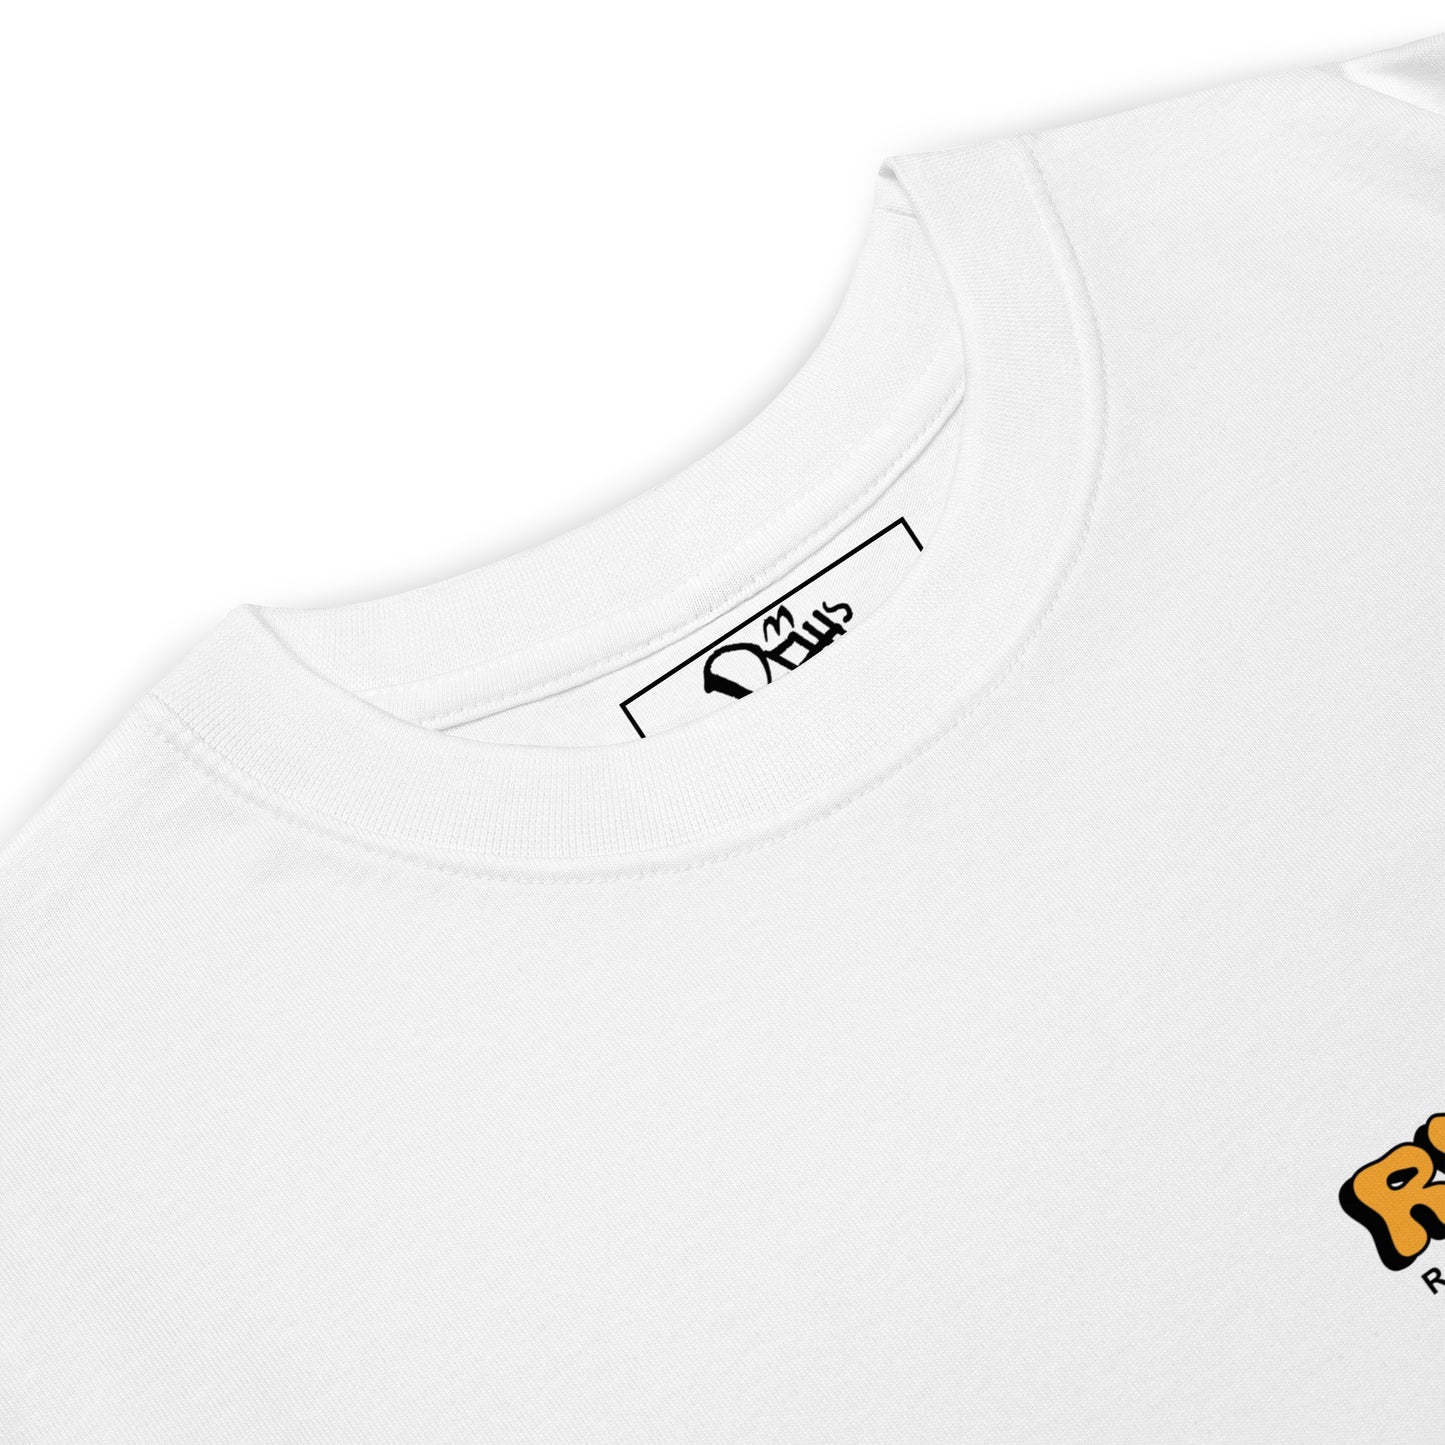 REHH V1 - Tee Shirt (White)